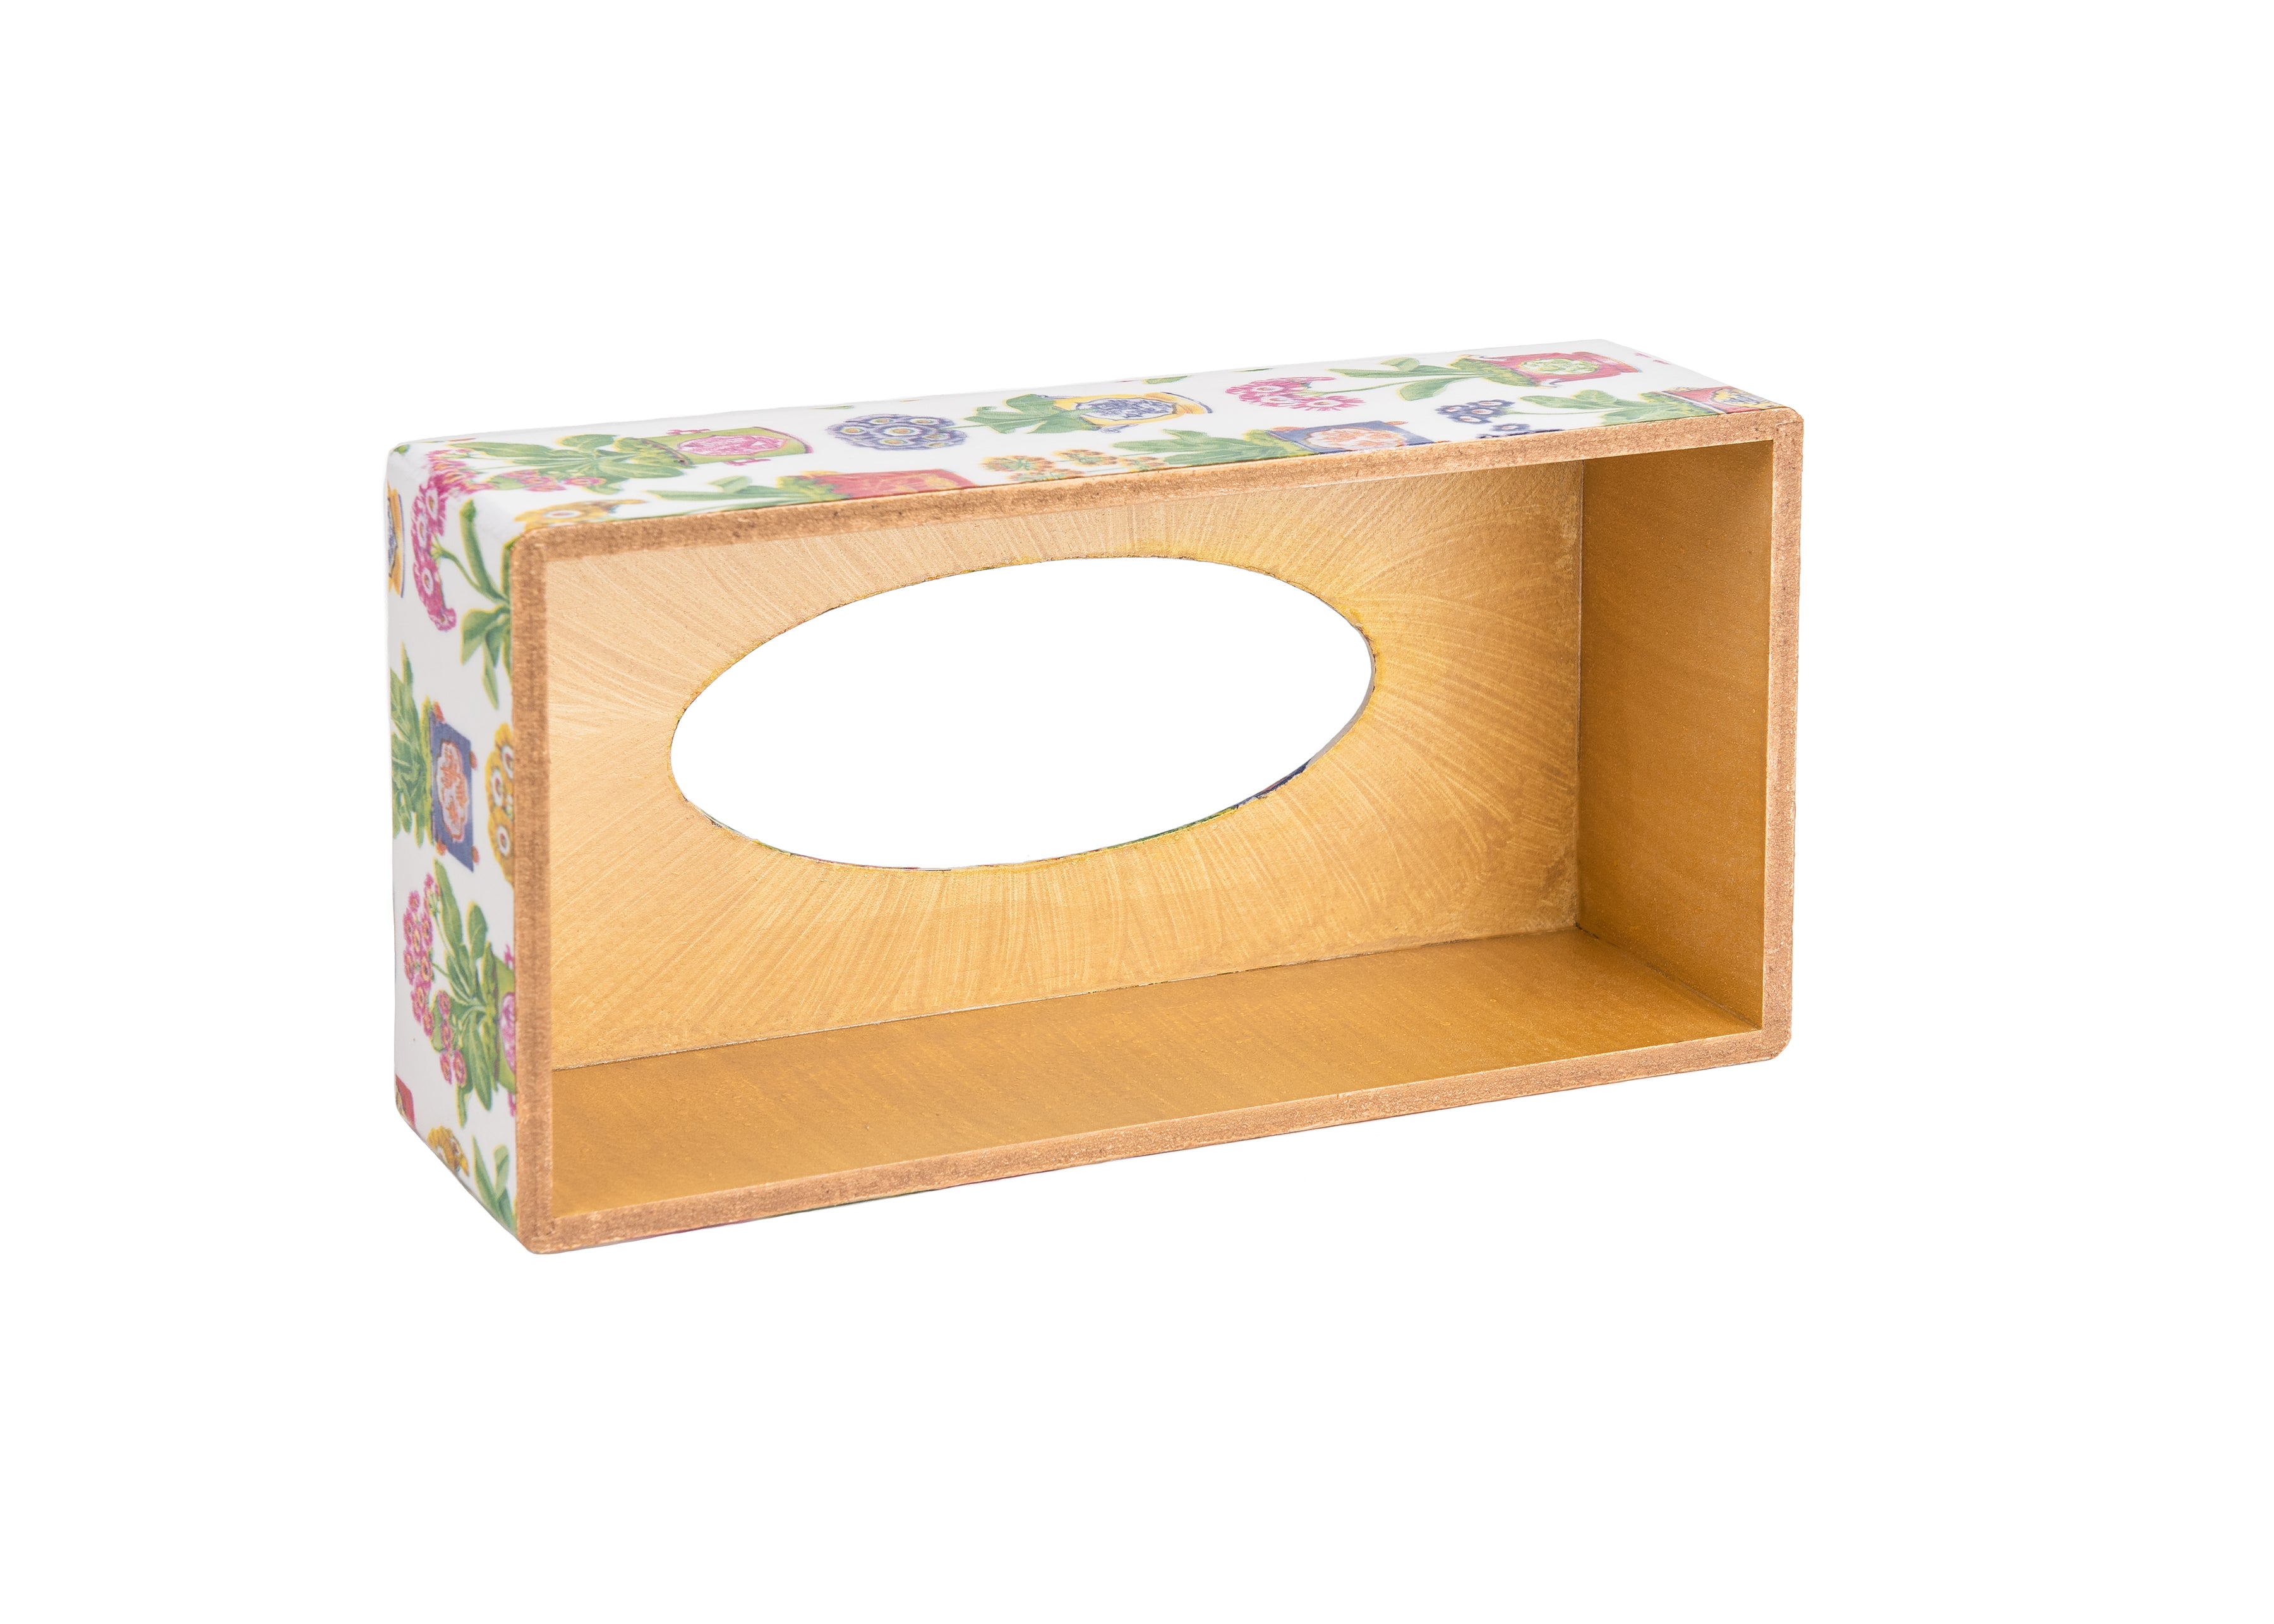 Green Snowdrop rectangular wooden tissue box cover